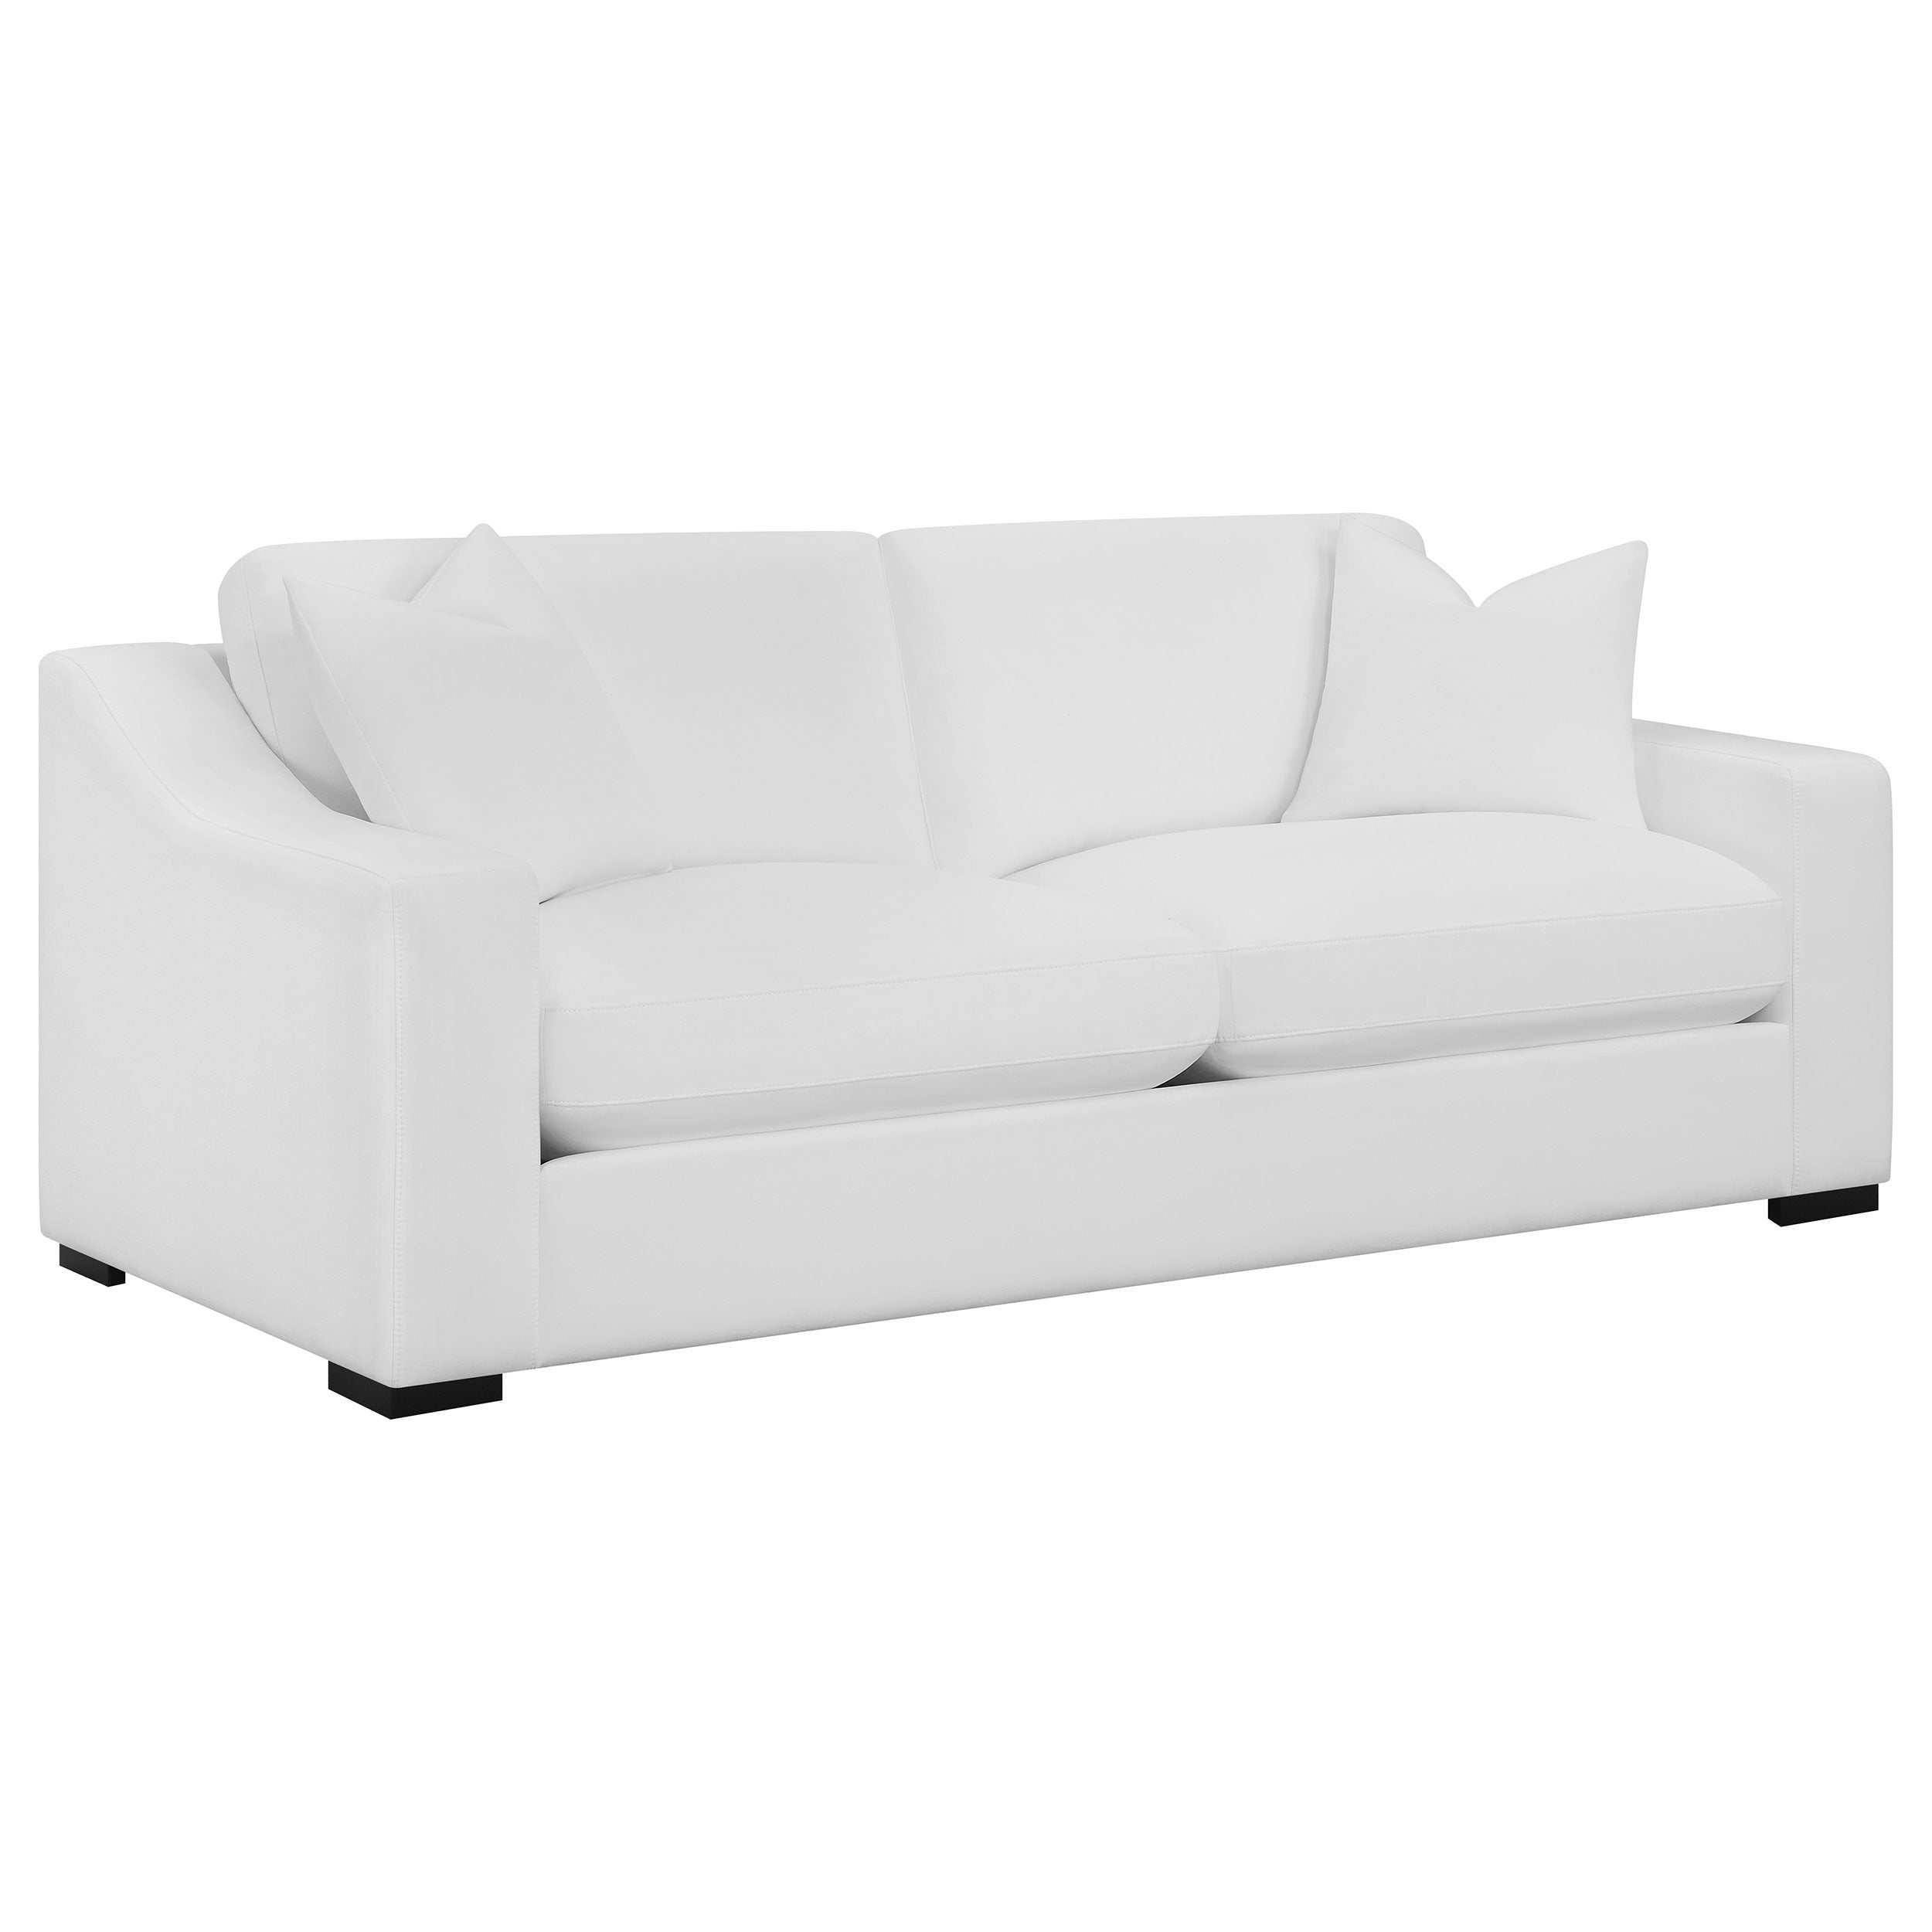 White Ashlyn Upholstered Sloped Arms Sofa | Image